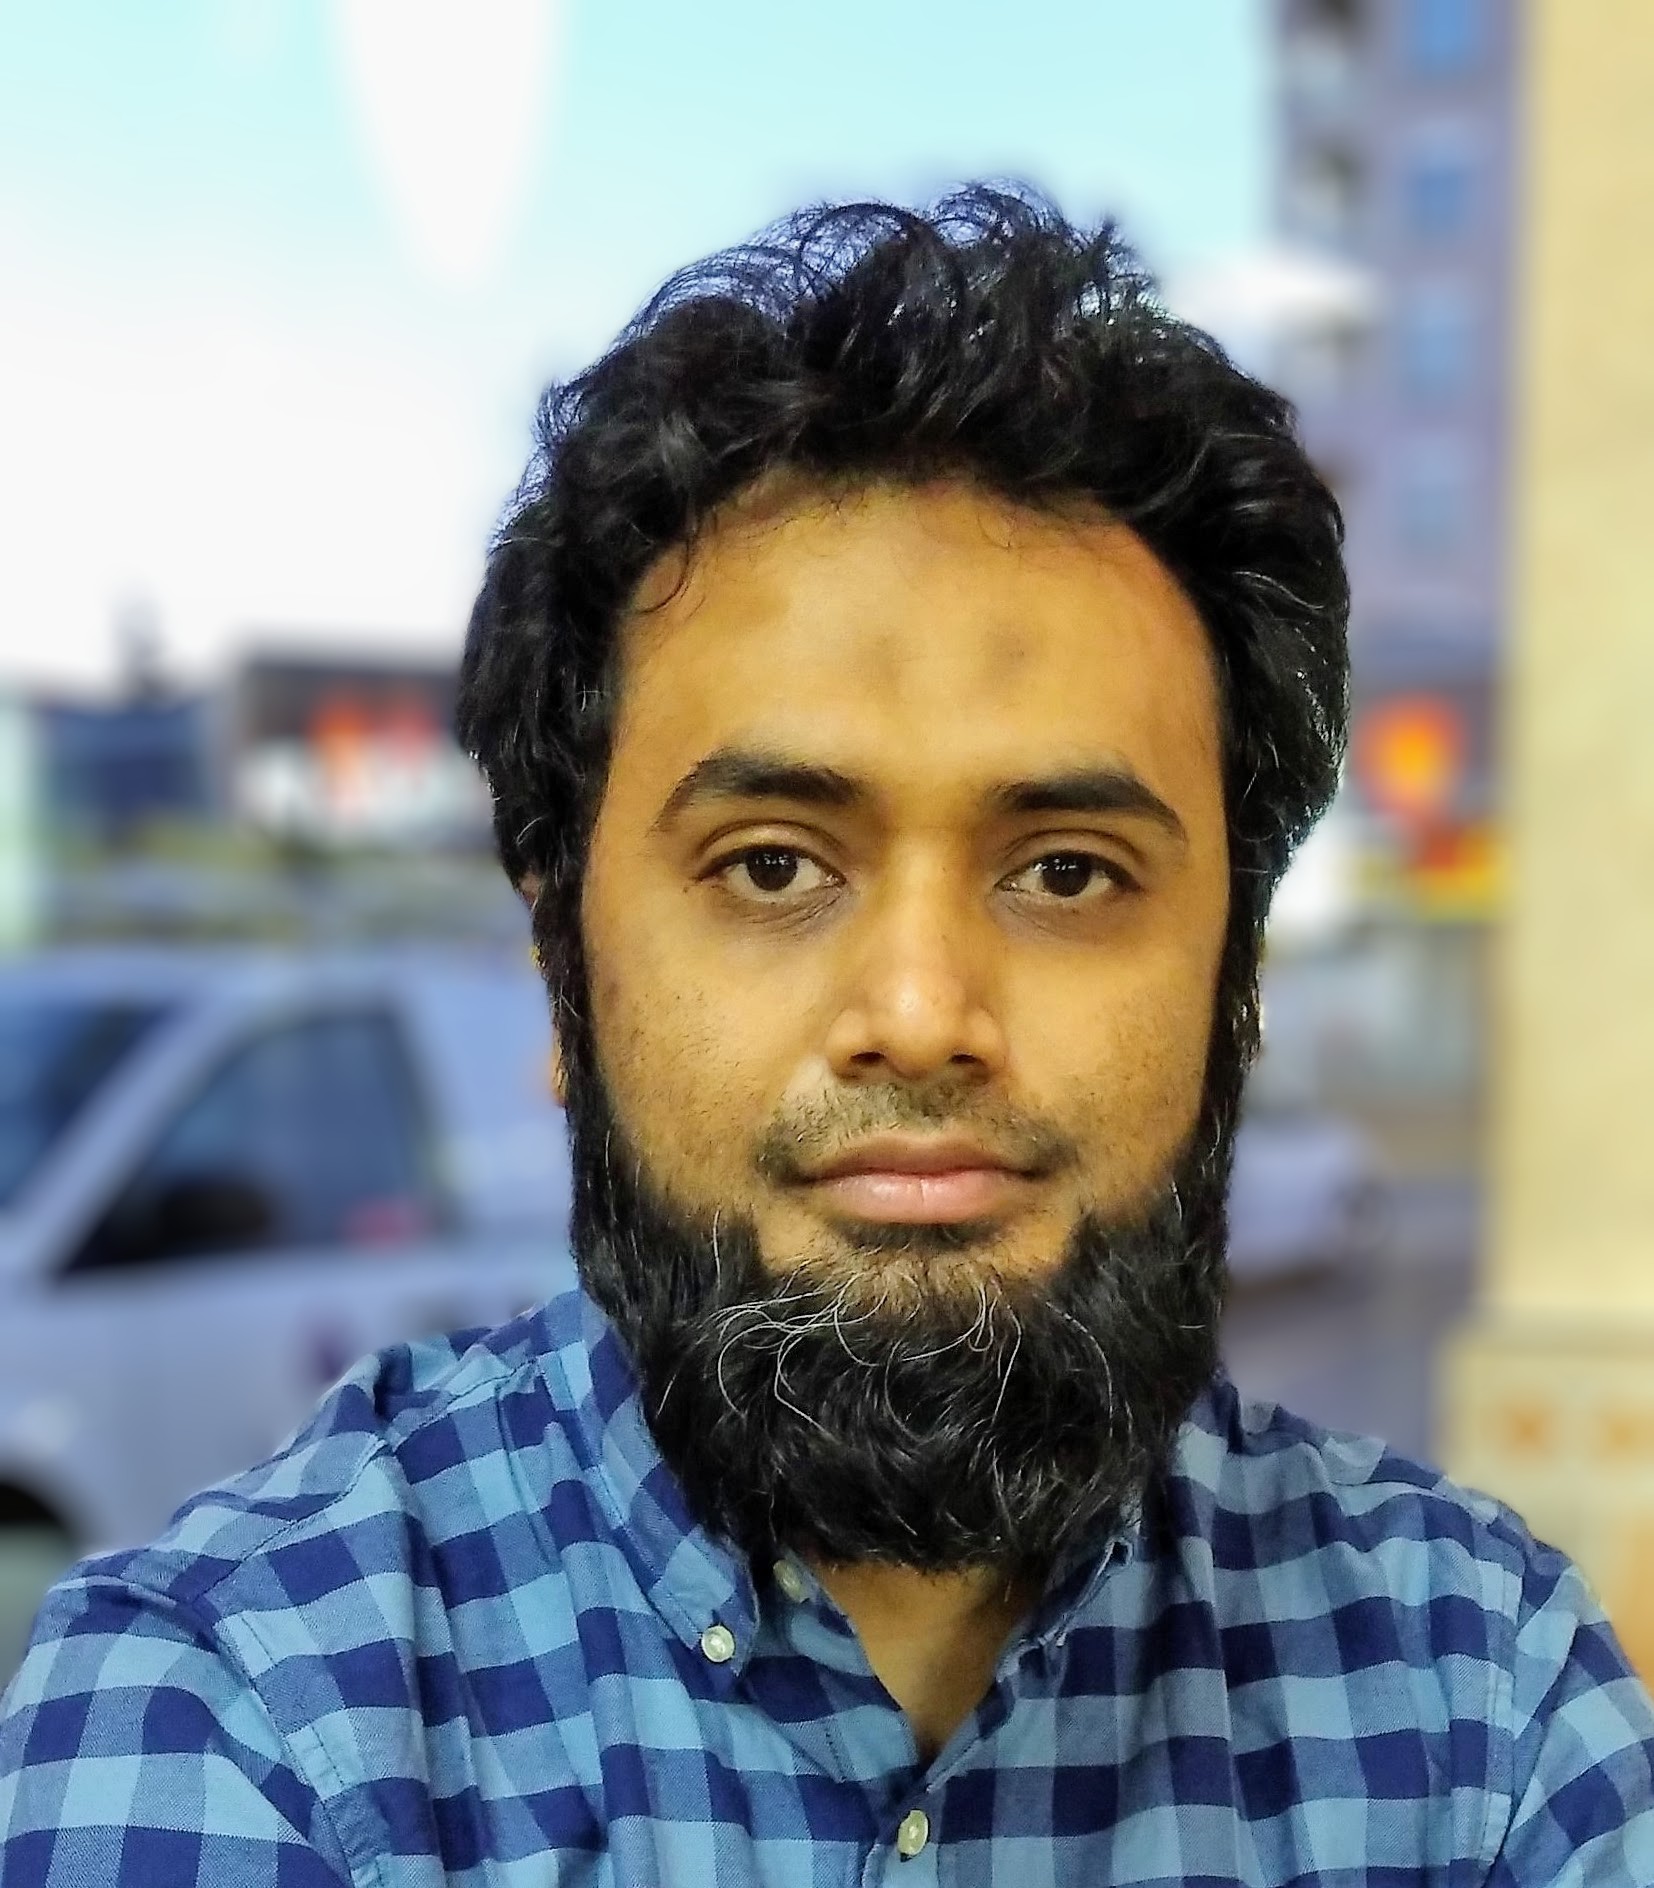 Quazi Rahman wearing a blue plaid button up shirt, looking at camera